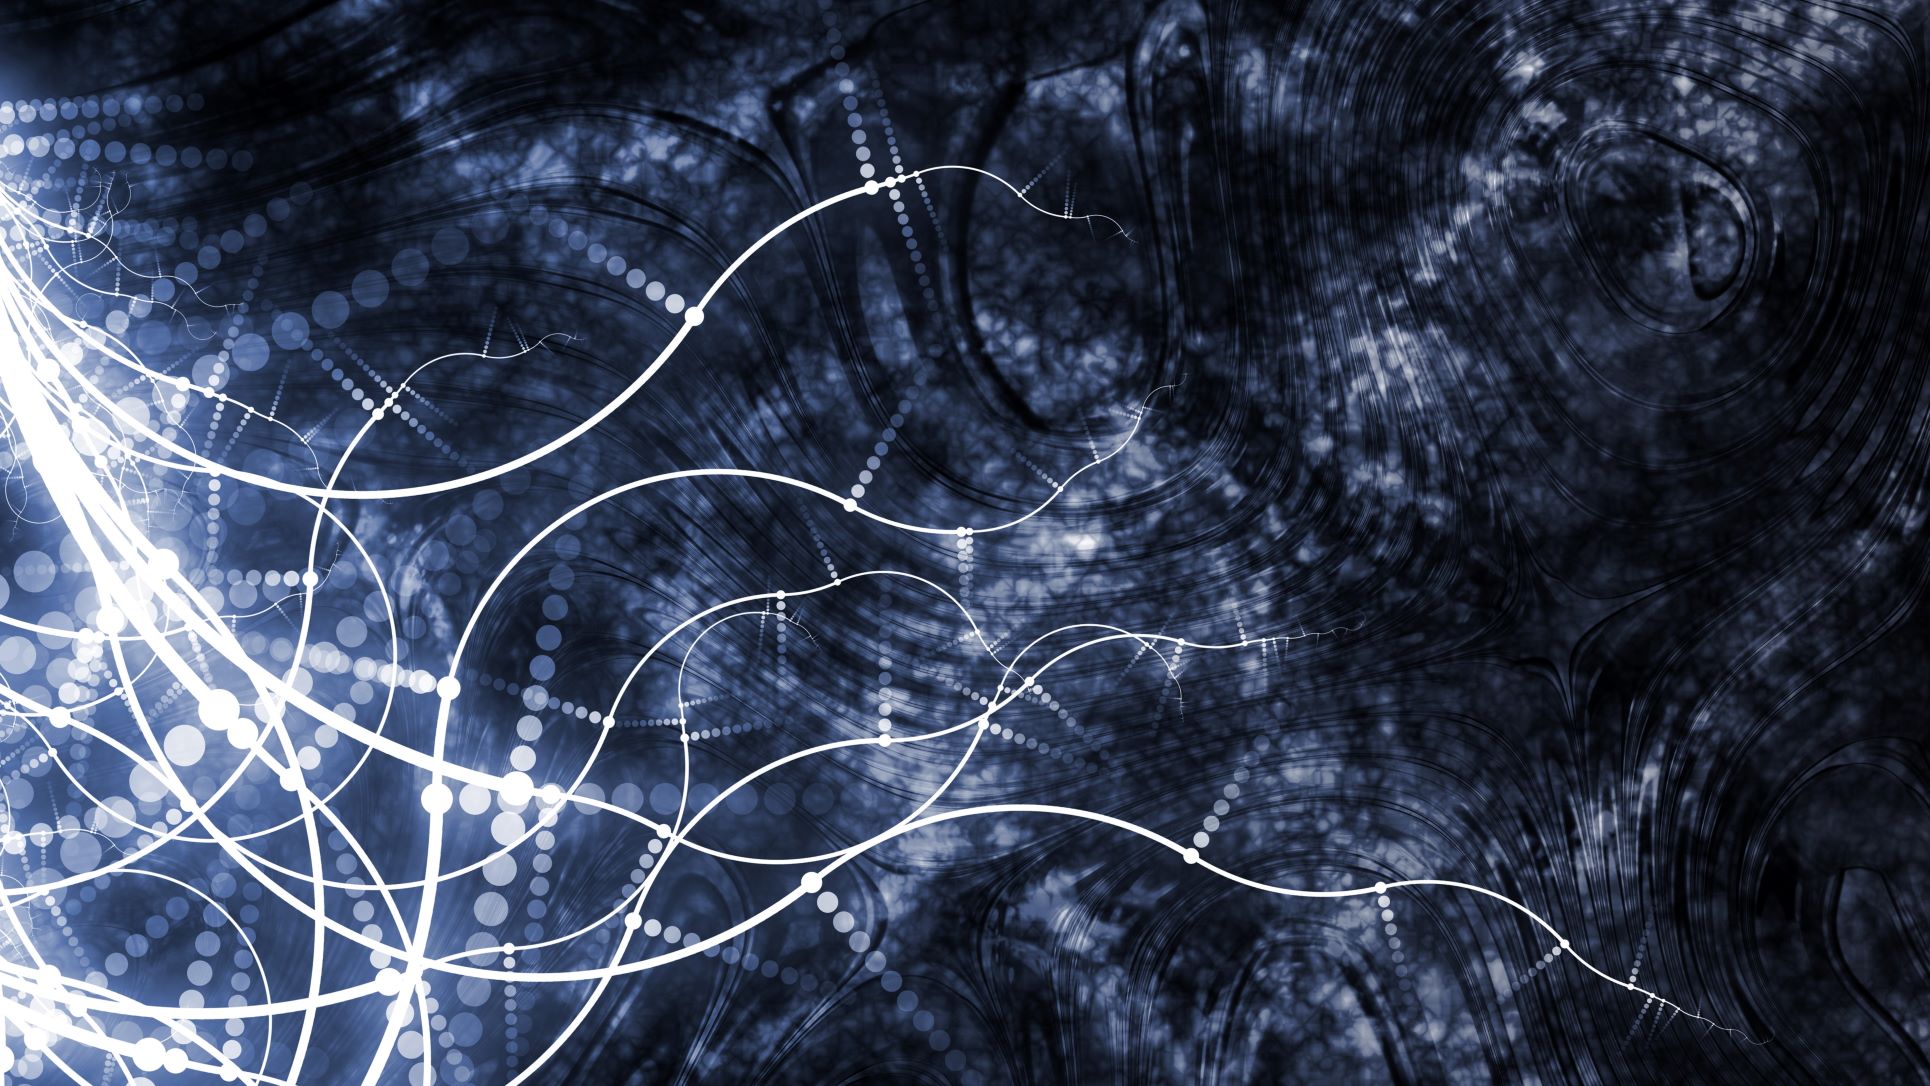 Abstract image of fibre optics and light bursts